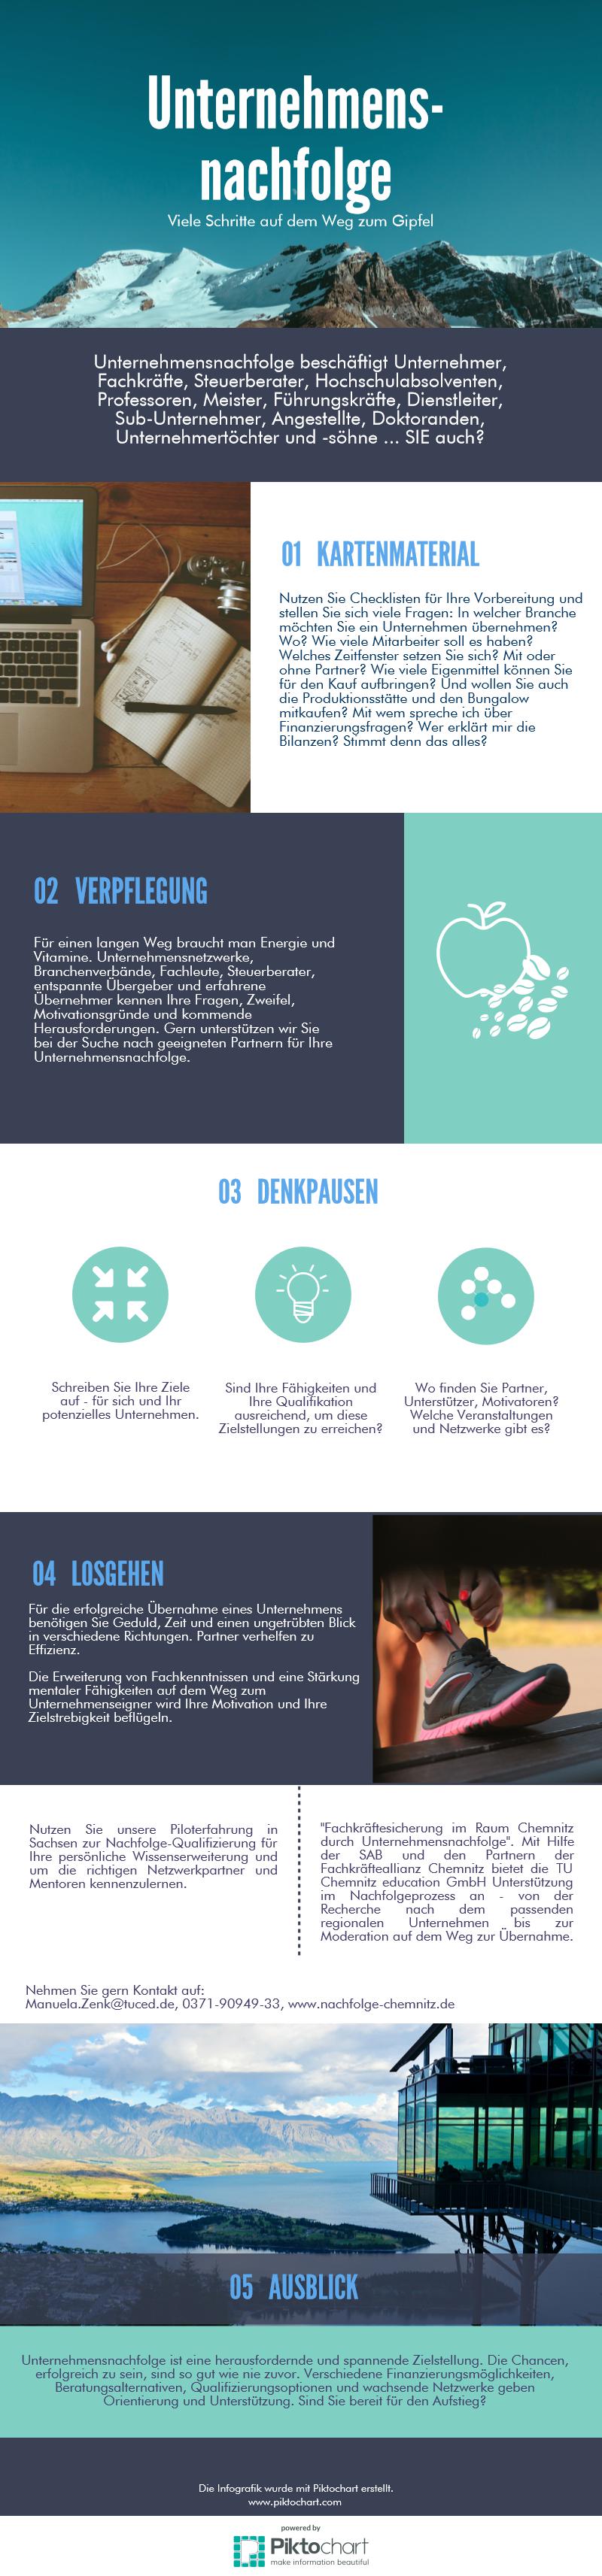 infografik_think-about_nachfolger